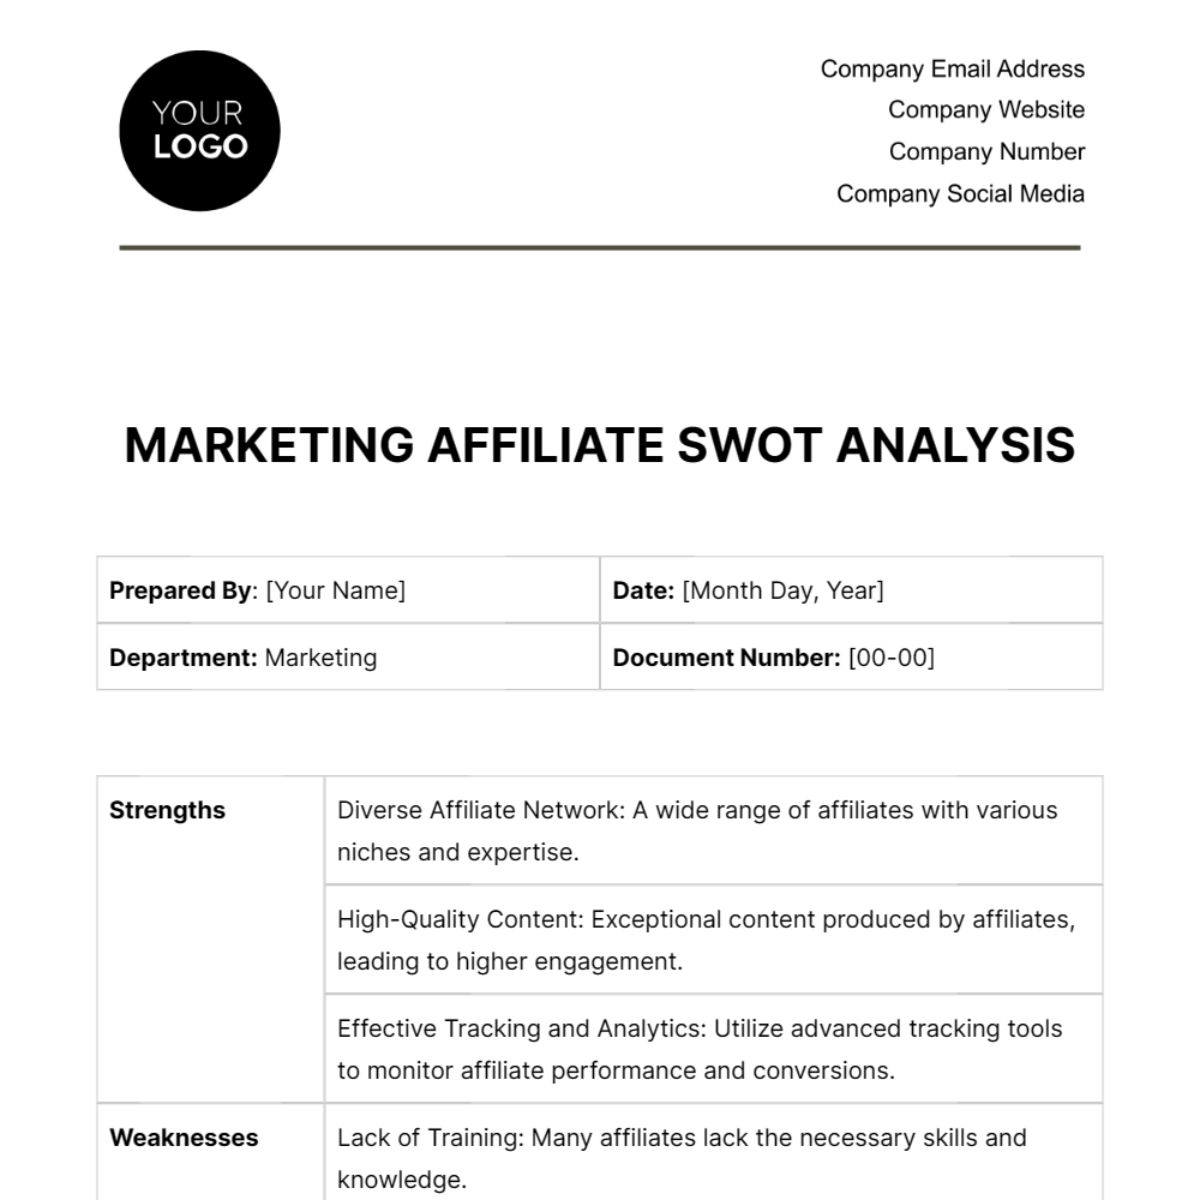 Marketing Affiliate SWOT Analysis Template